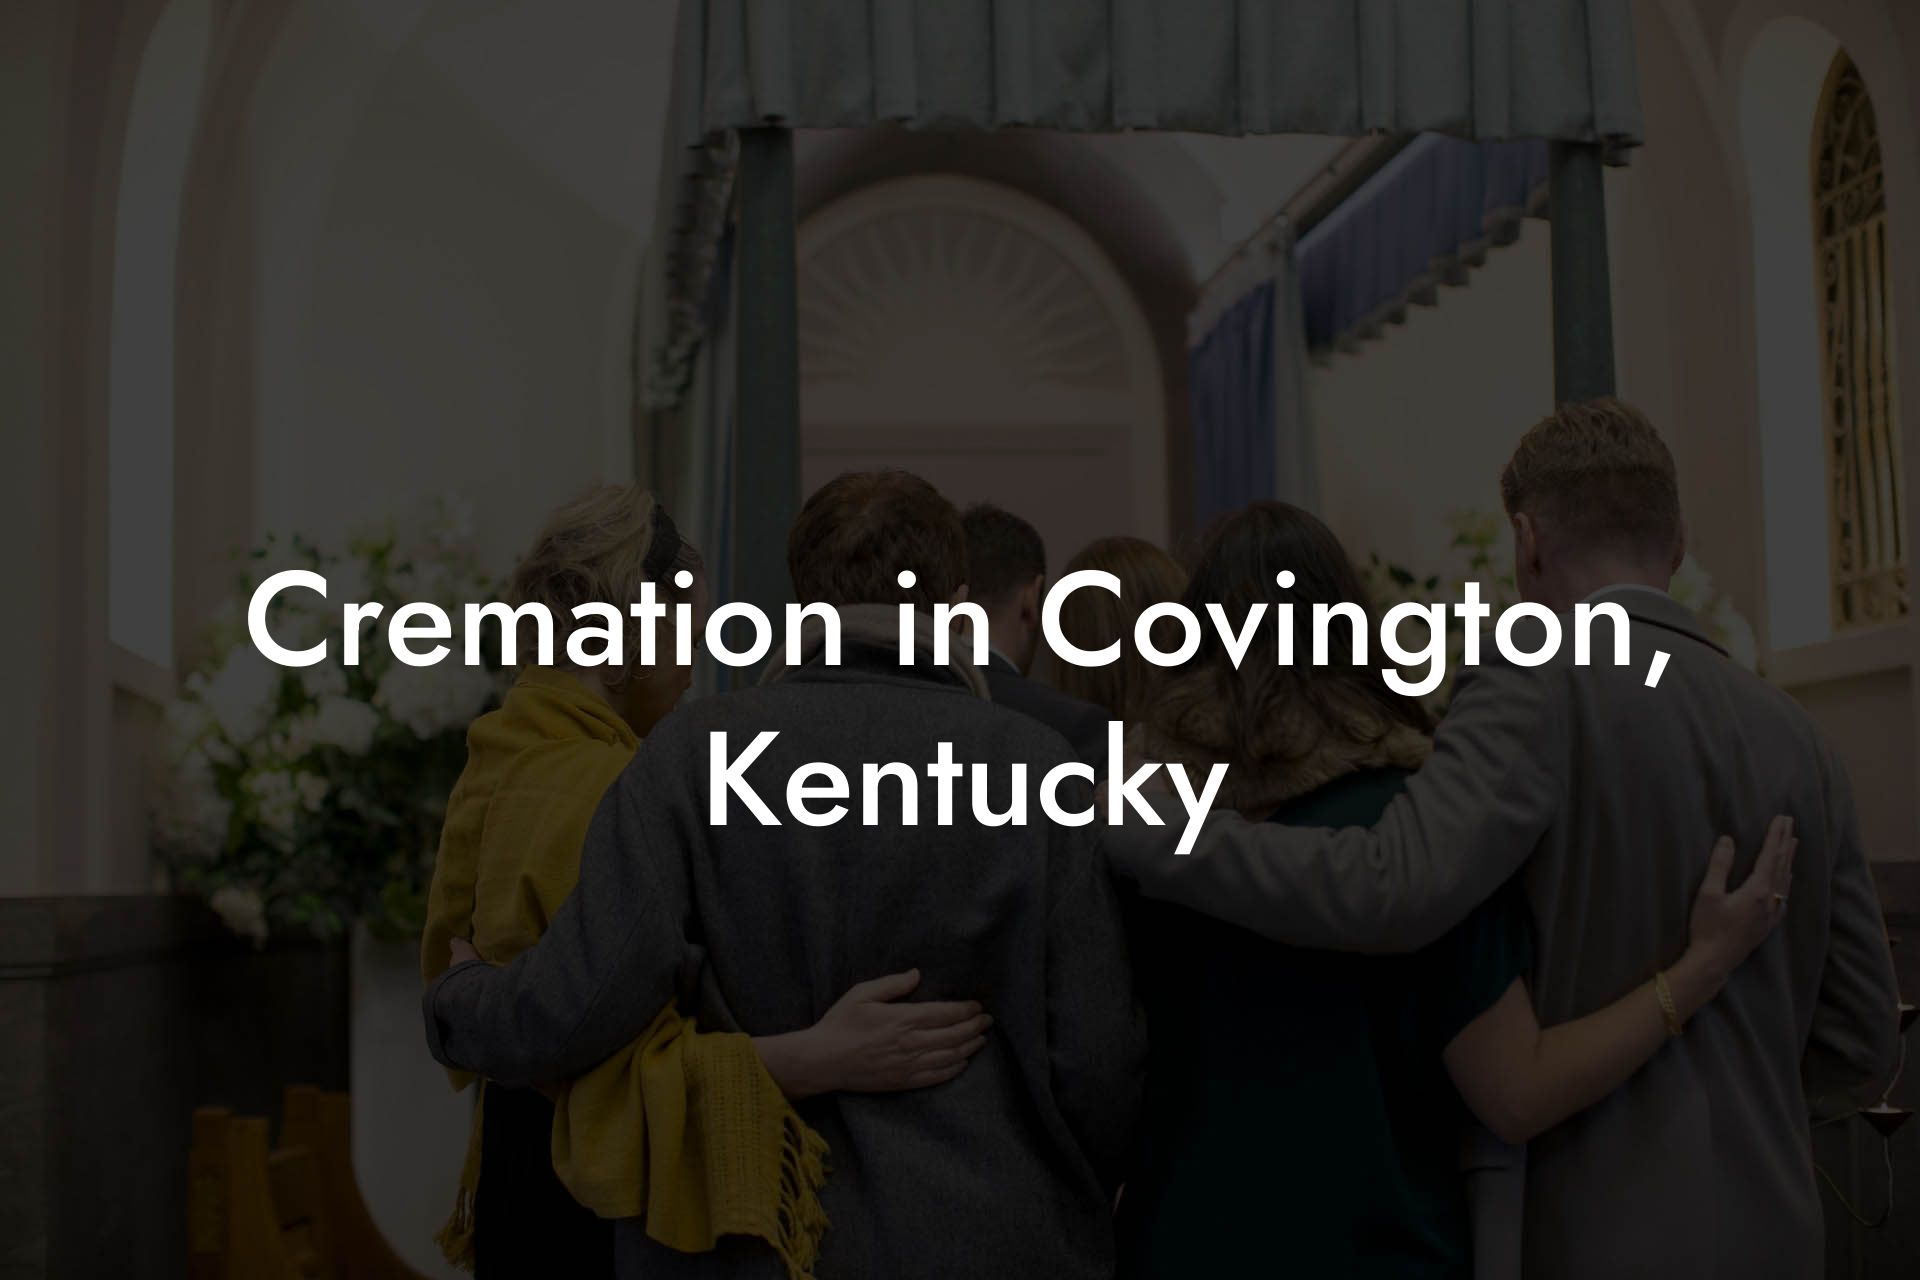 Cremation in Covington, Kentucky